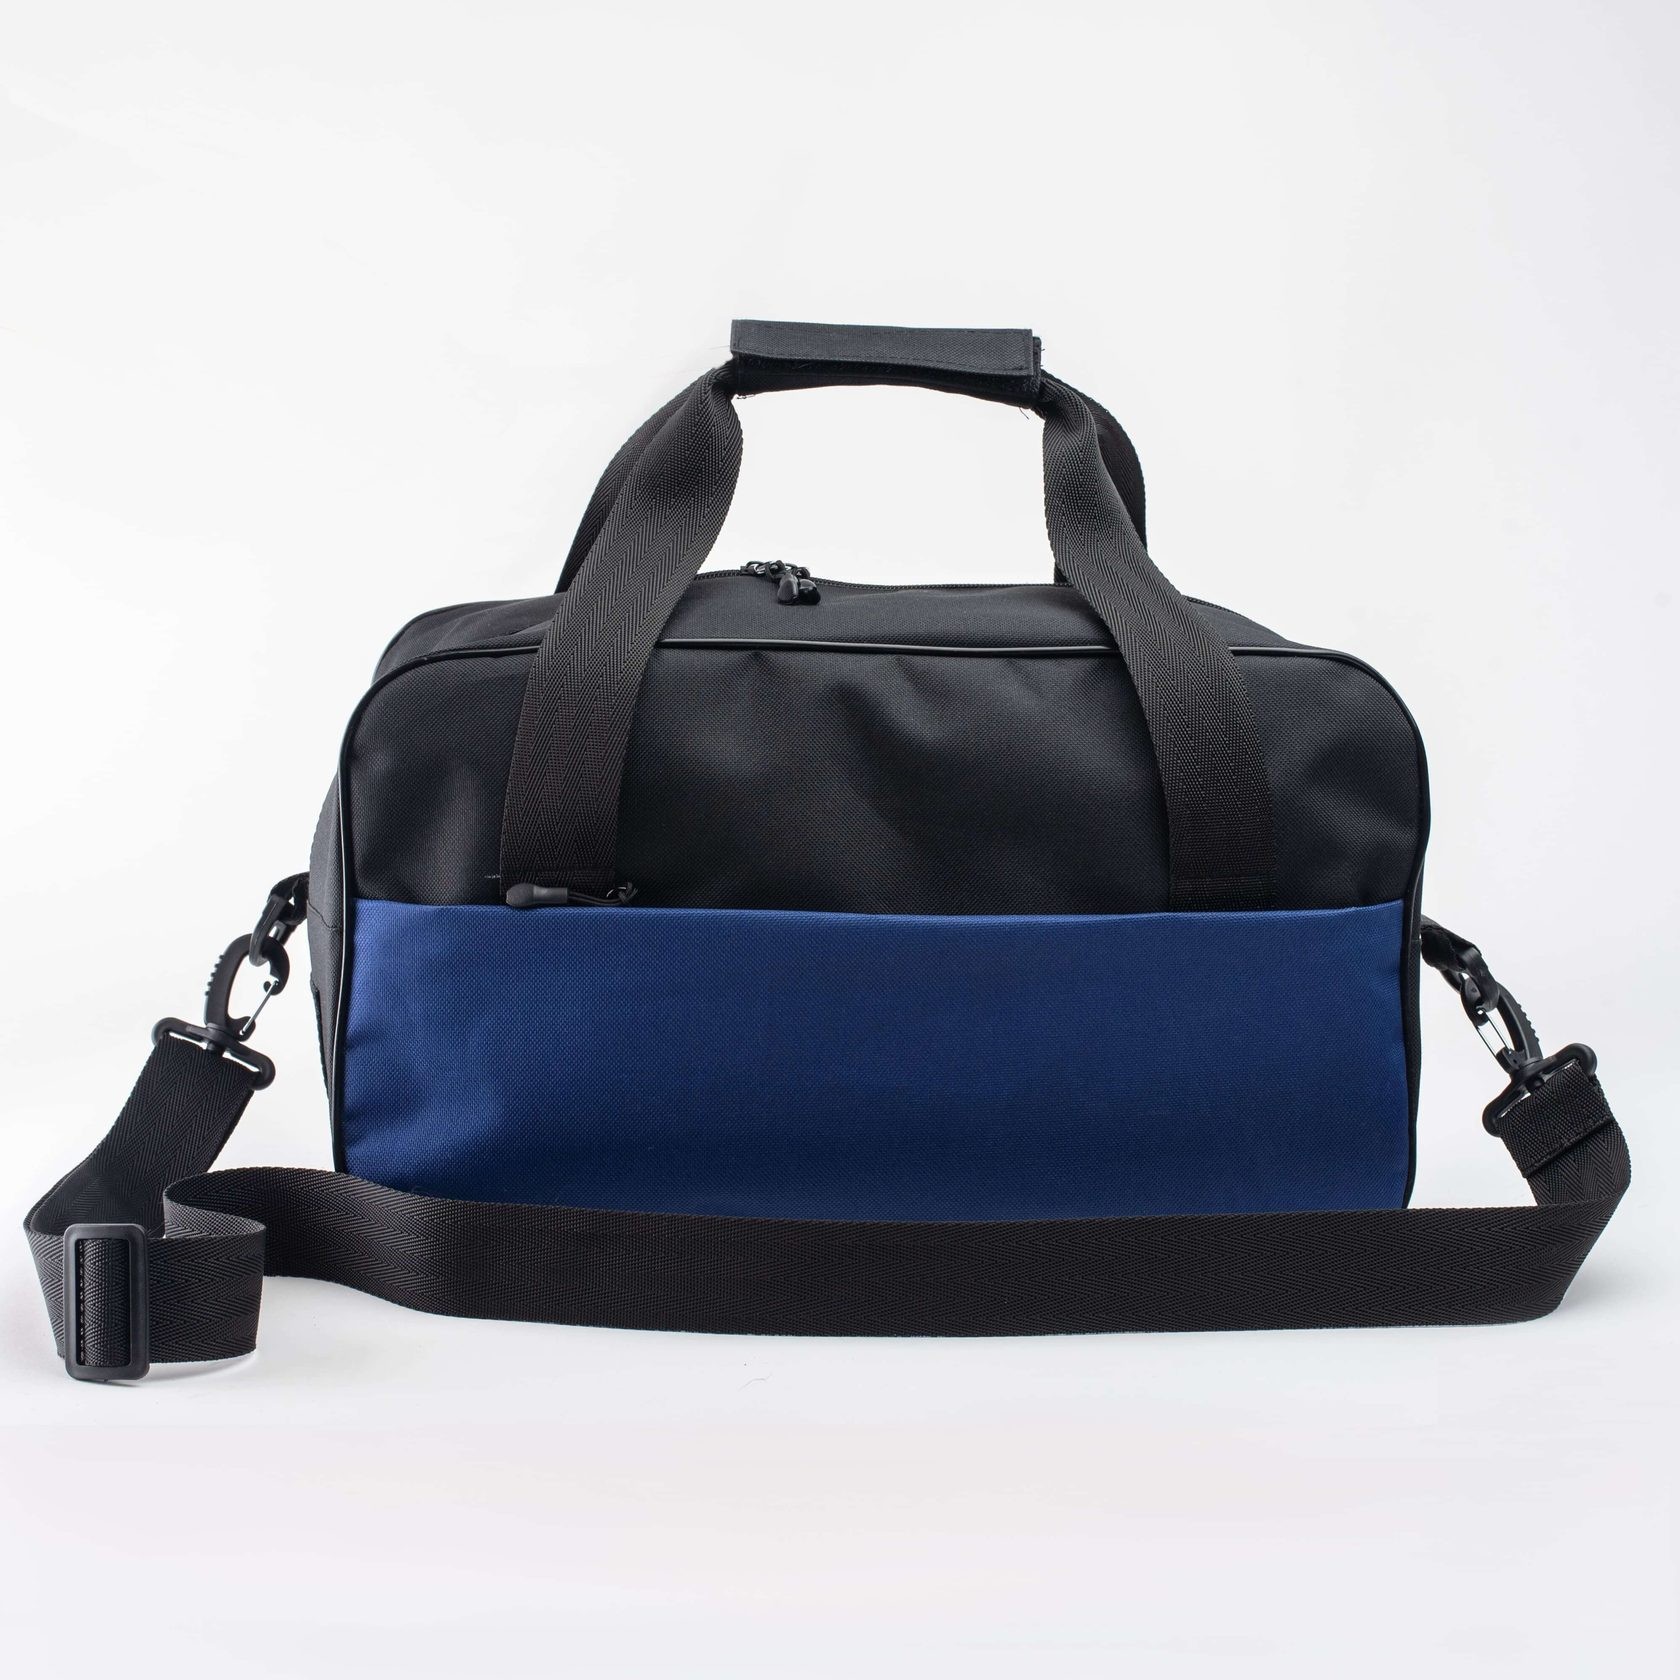 TRVLbag black&blue | hand luggage | bag 40x20x25 cm